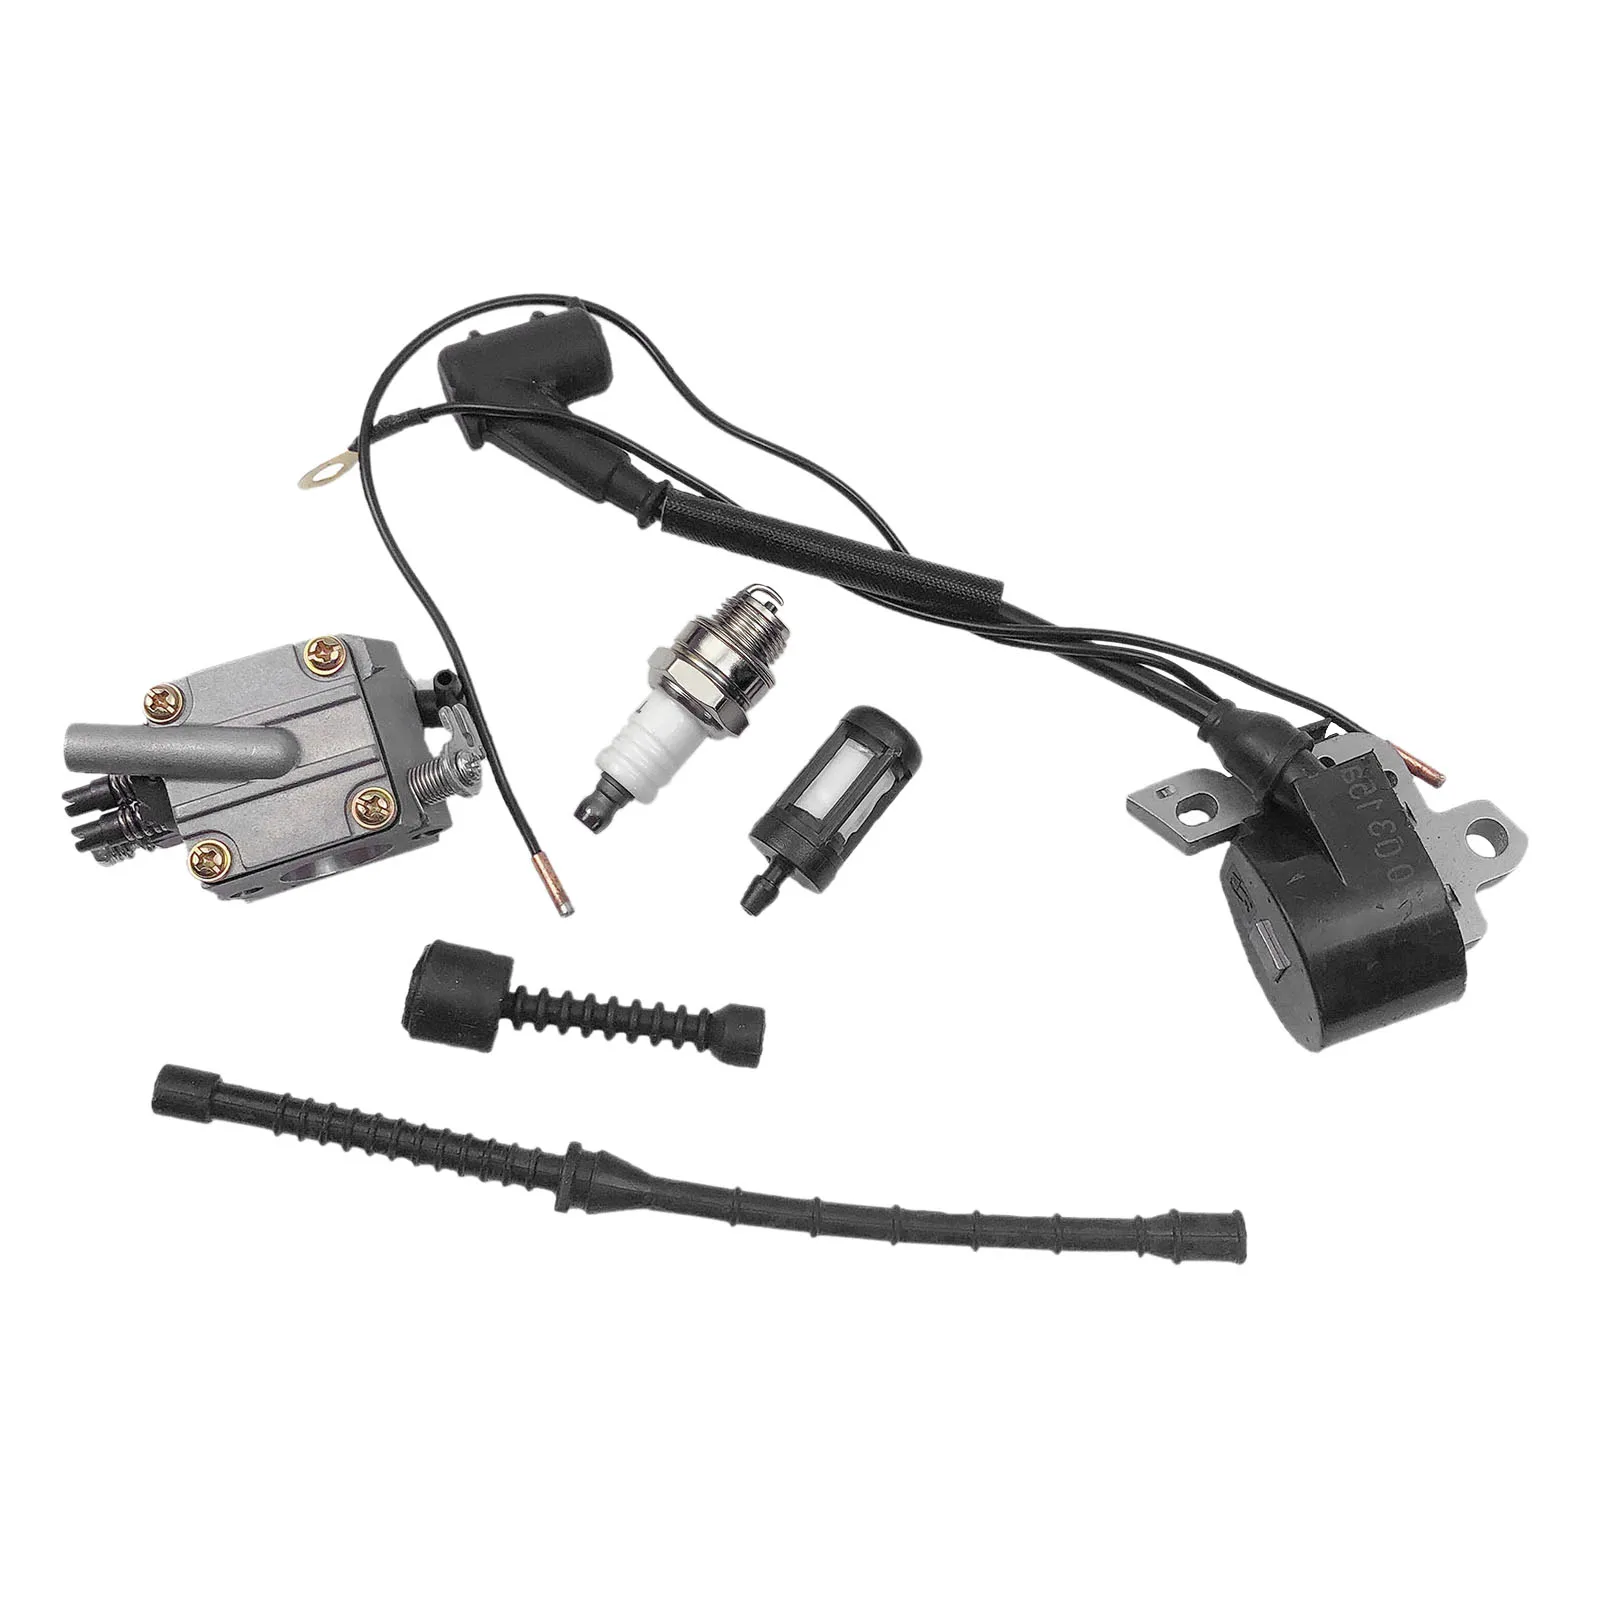 Tool parts Carburetor Ignition Coil & Fuel Line /Filter Spark Plug For STIHL Chain Saw 038 MS380 MS381 038 AV SUPER MAGNUM